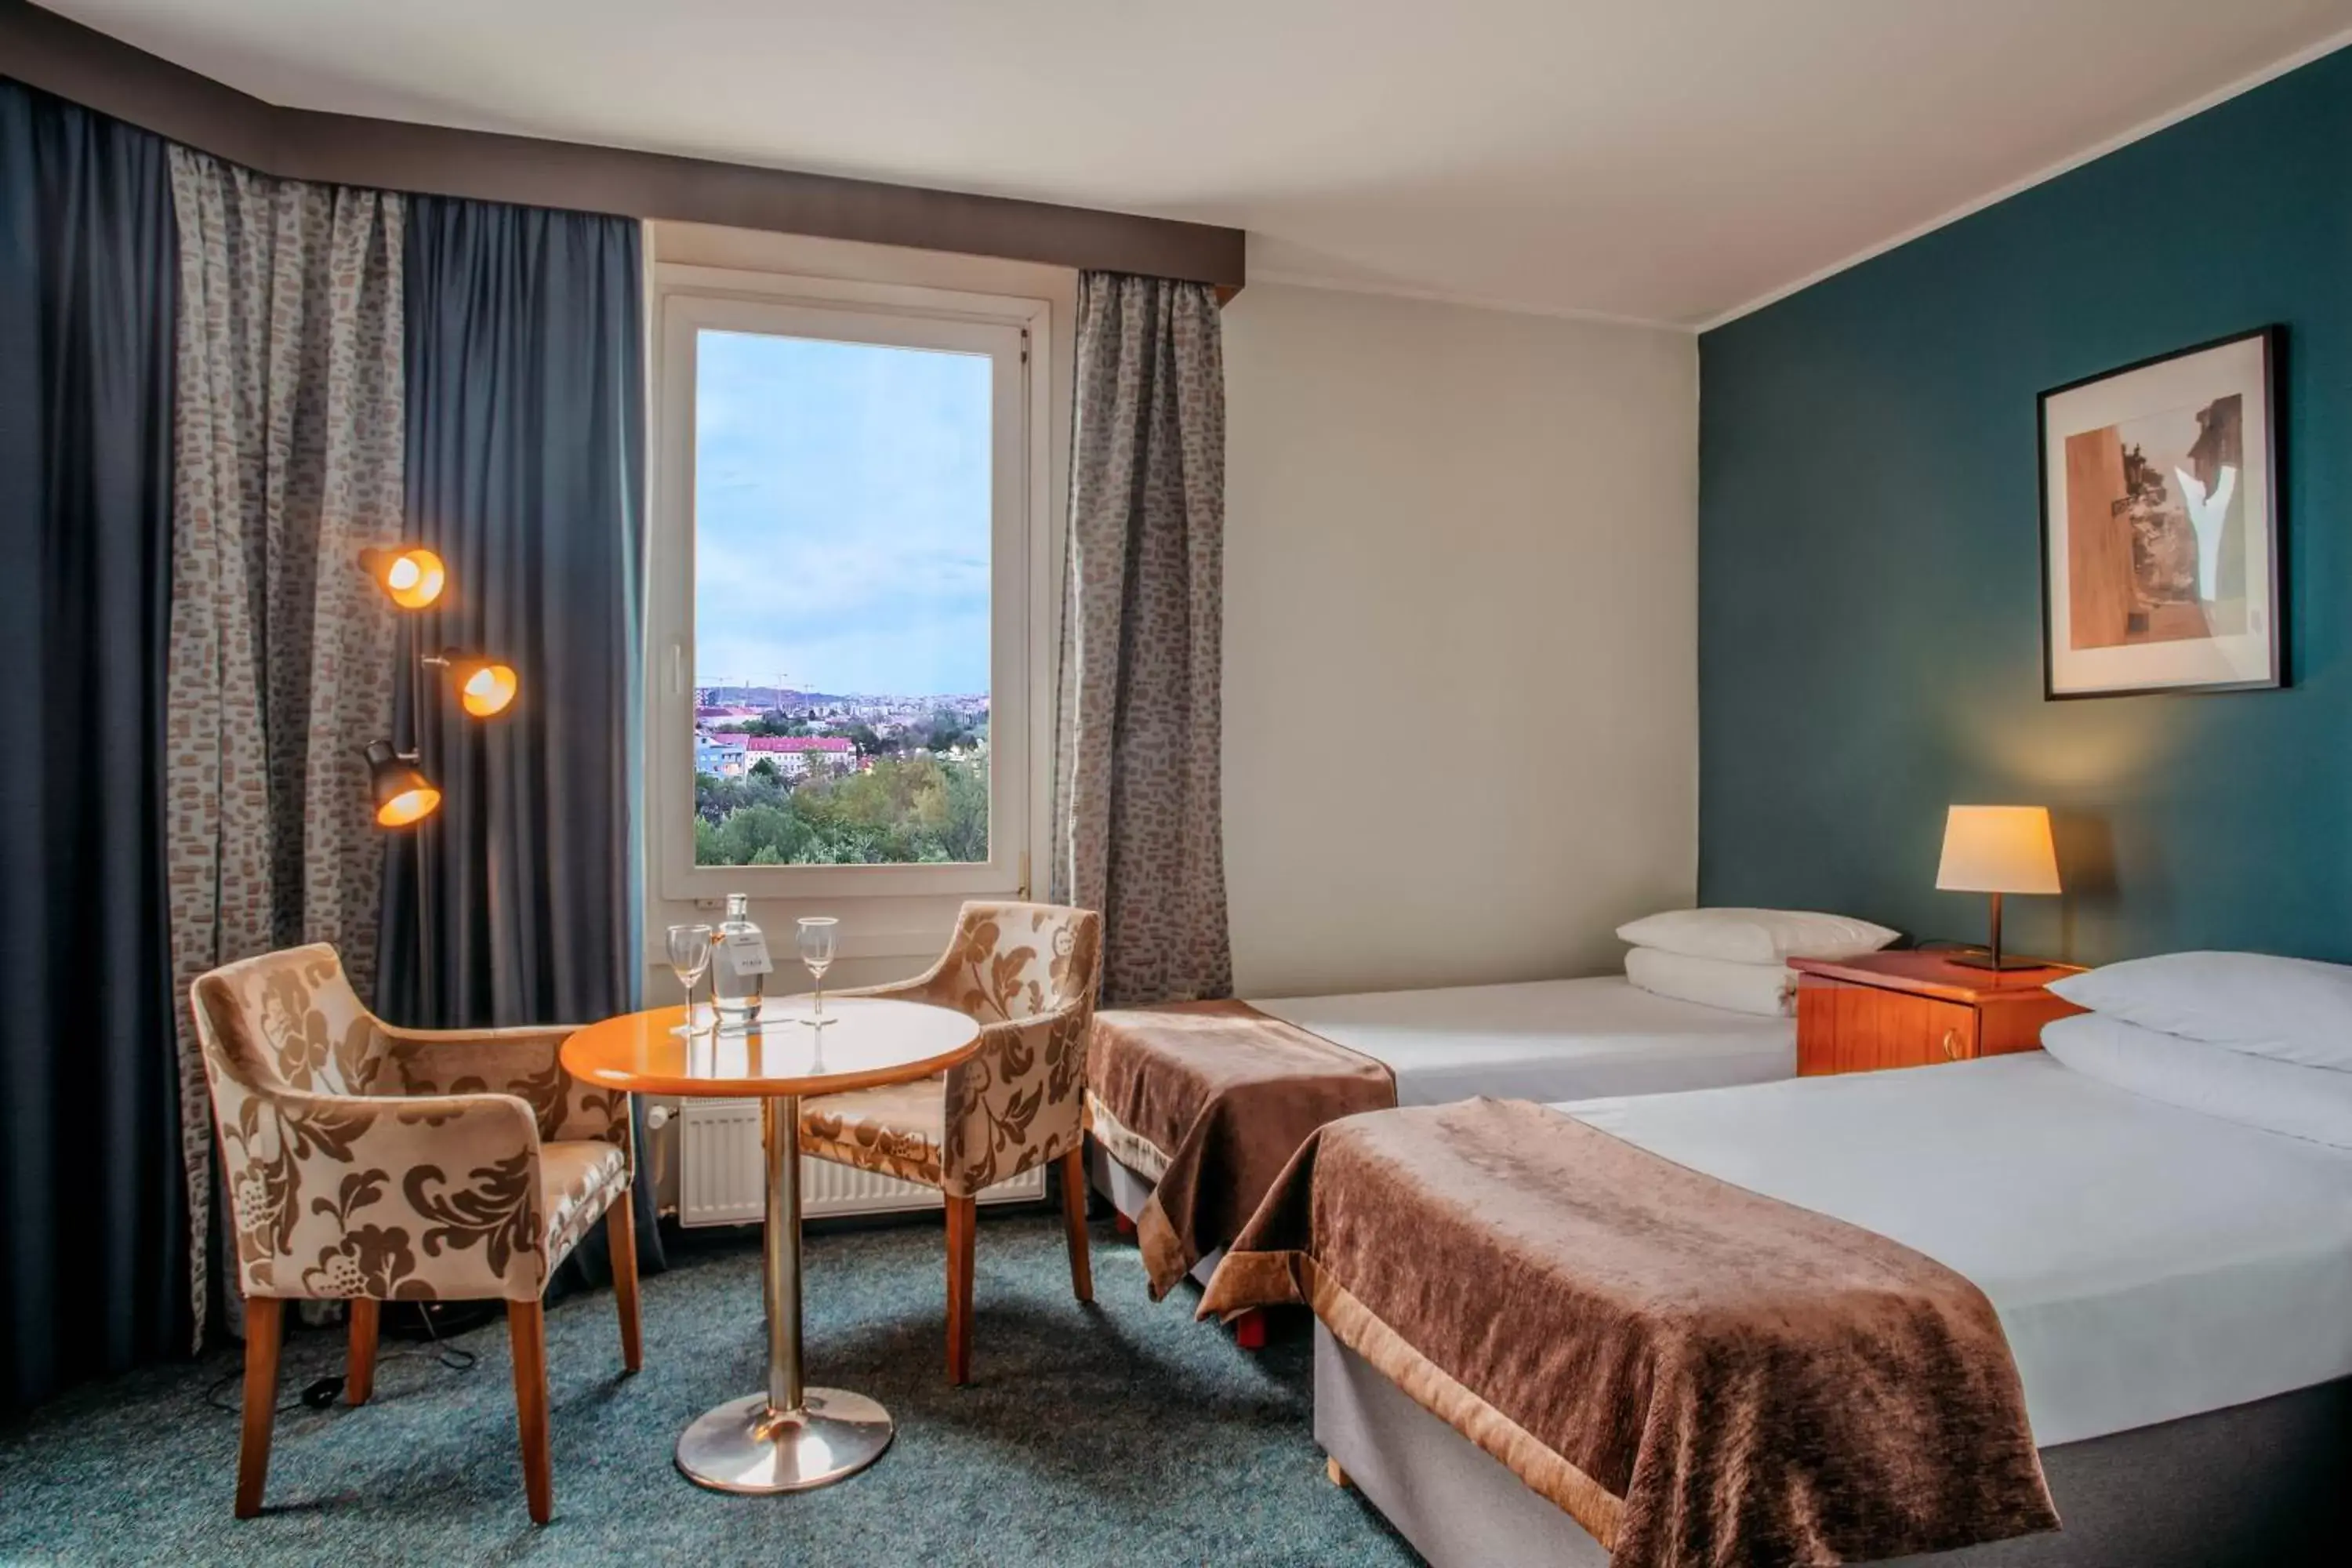 Bedroom in Plaza Prague Hotel - Czech Leading Hotels